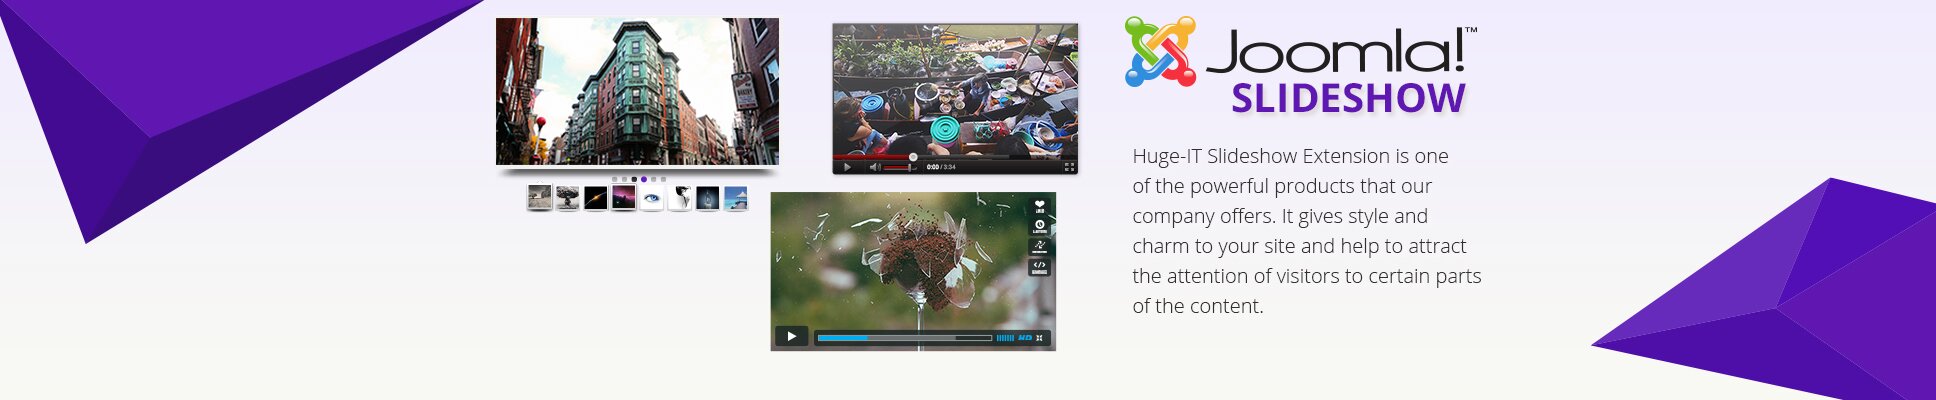 Joomla Slideshow Demo 2 – Youtube Slider